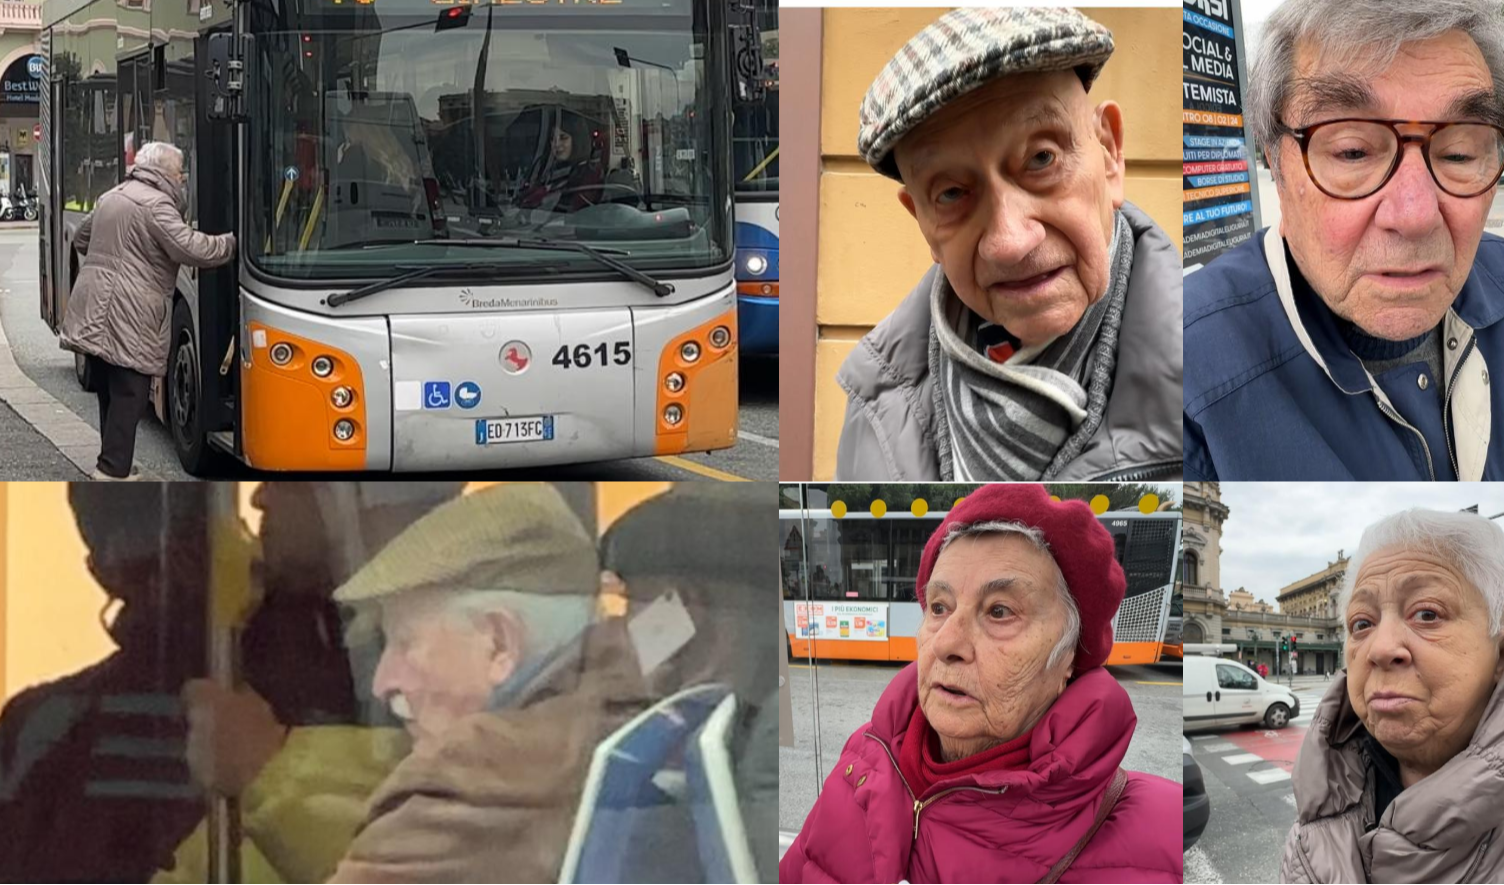 Gratis per over 70: bus presi d'assalto dai pensionati